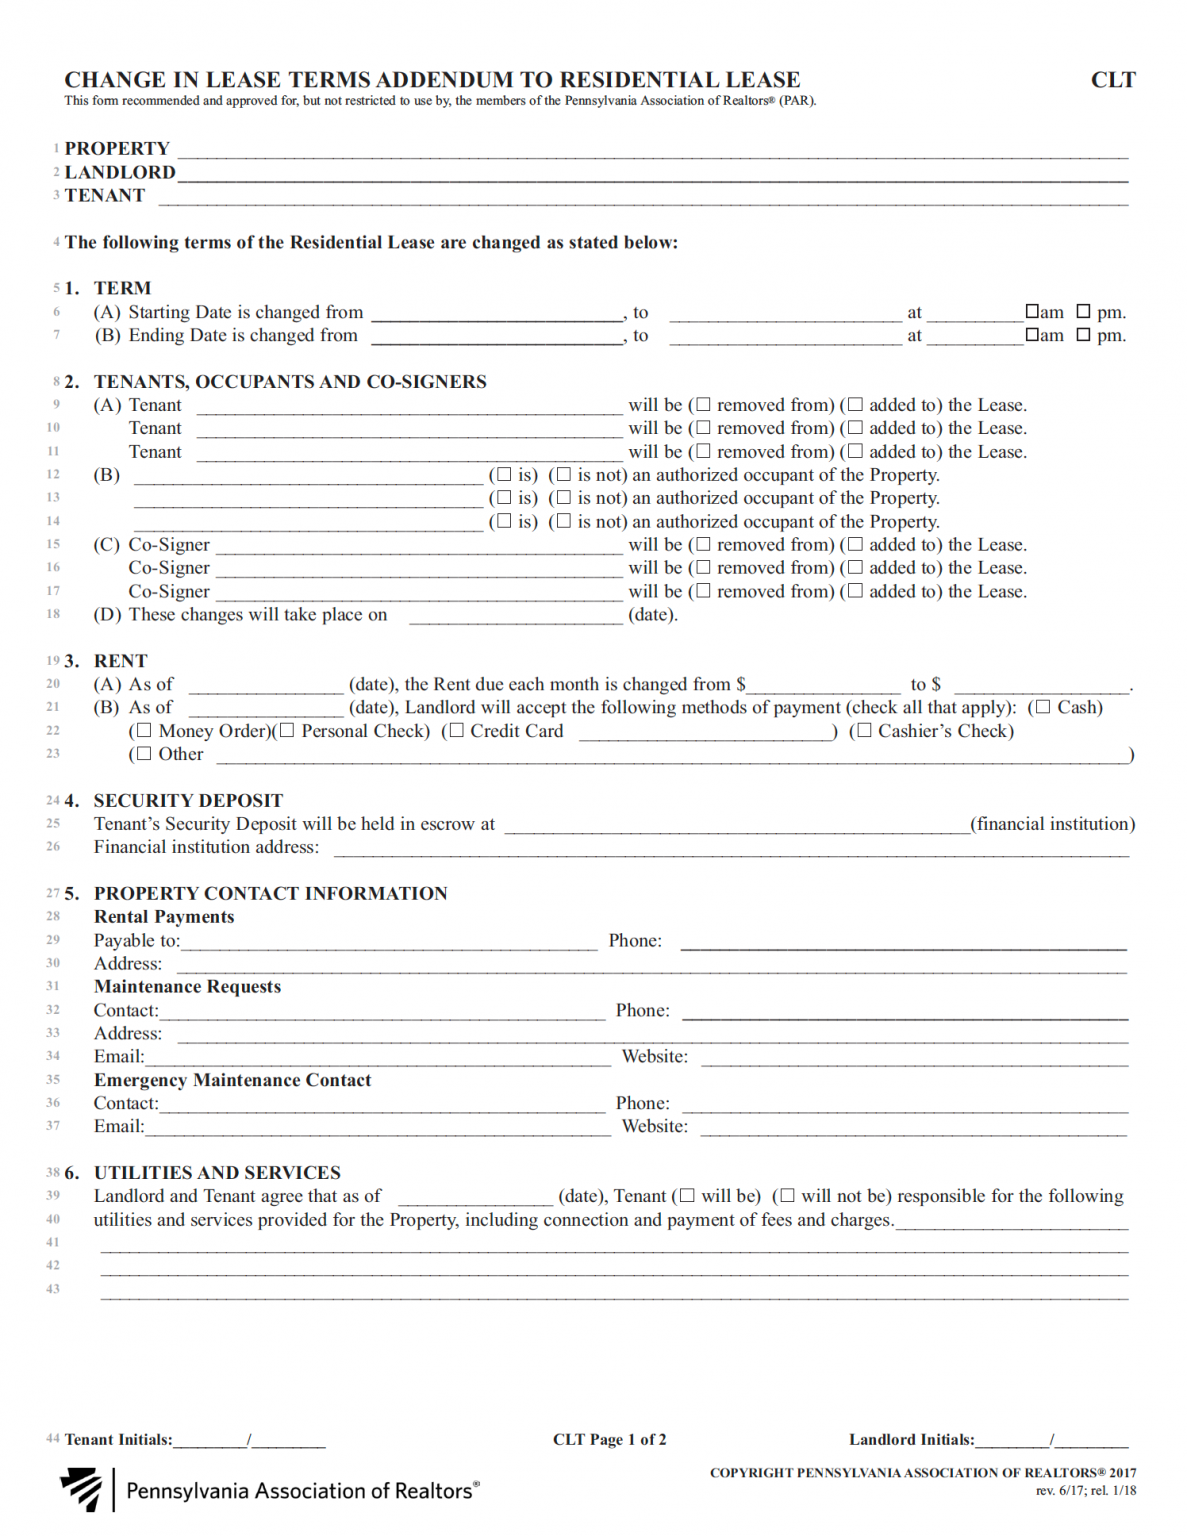 Free Pennsylvania Rental Lease Agreement Templates PDF WORD